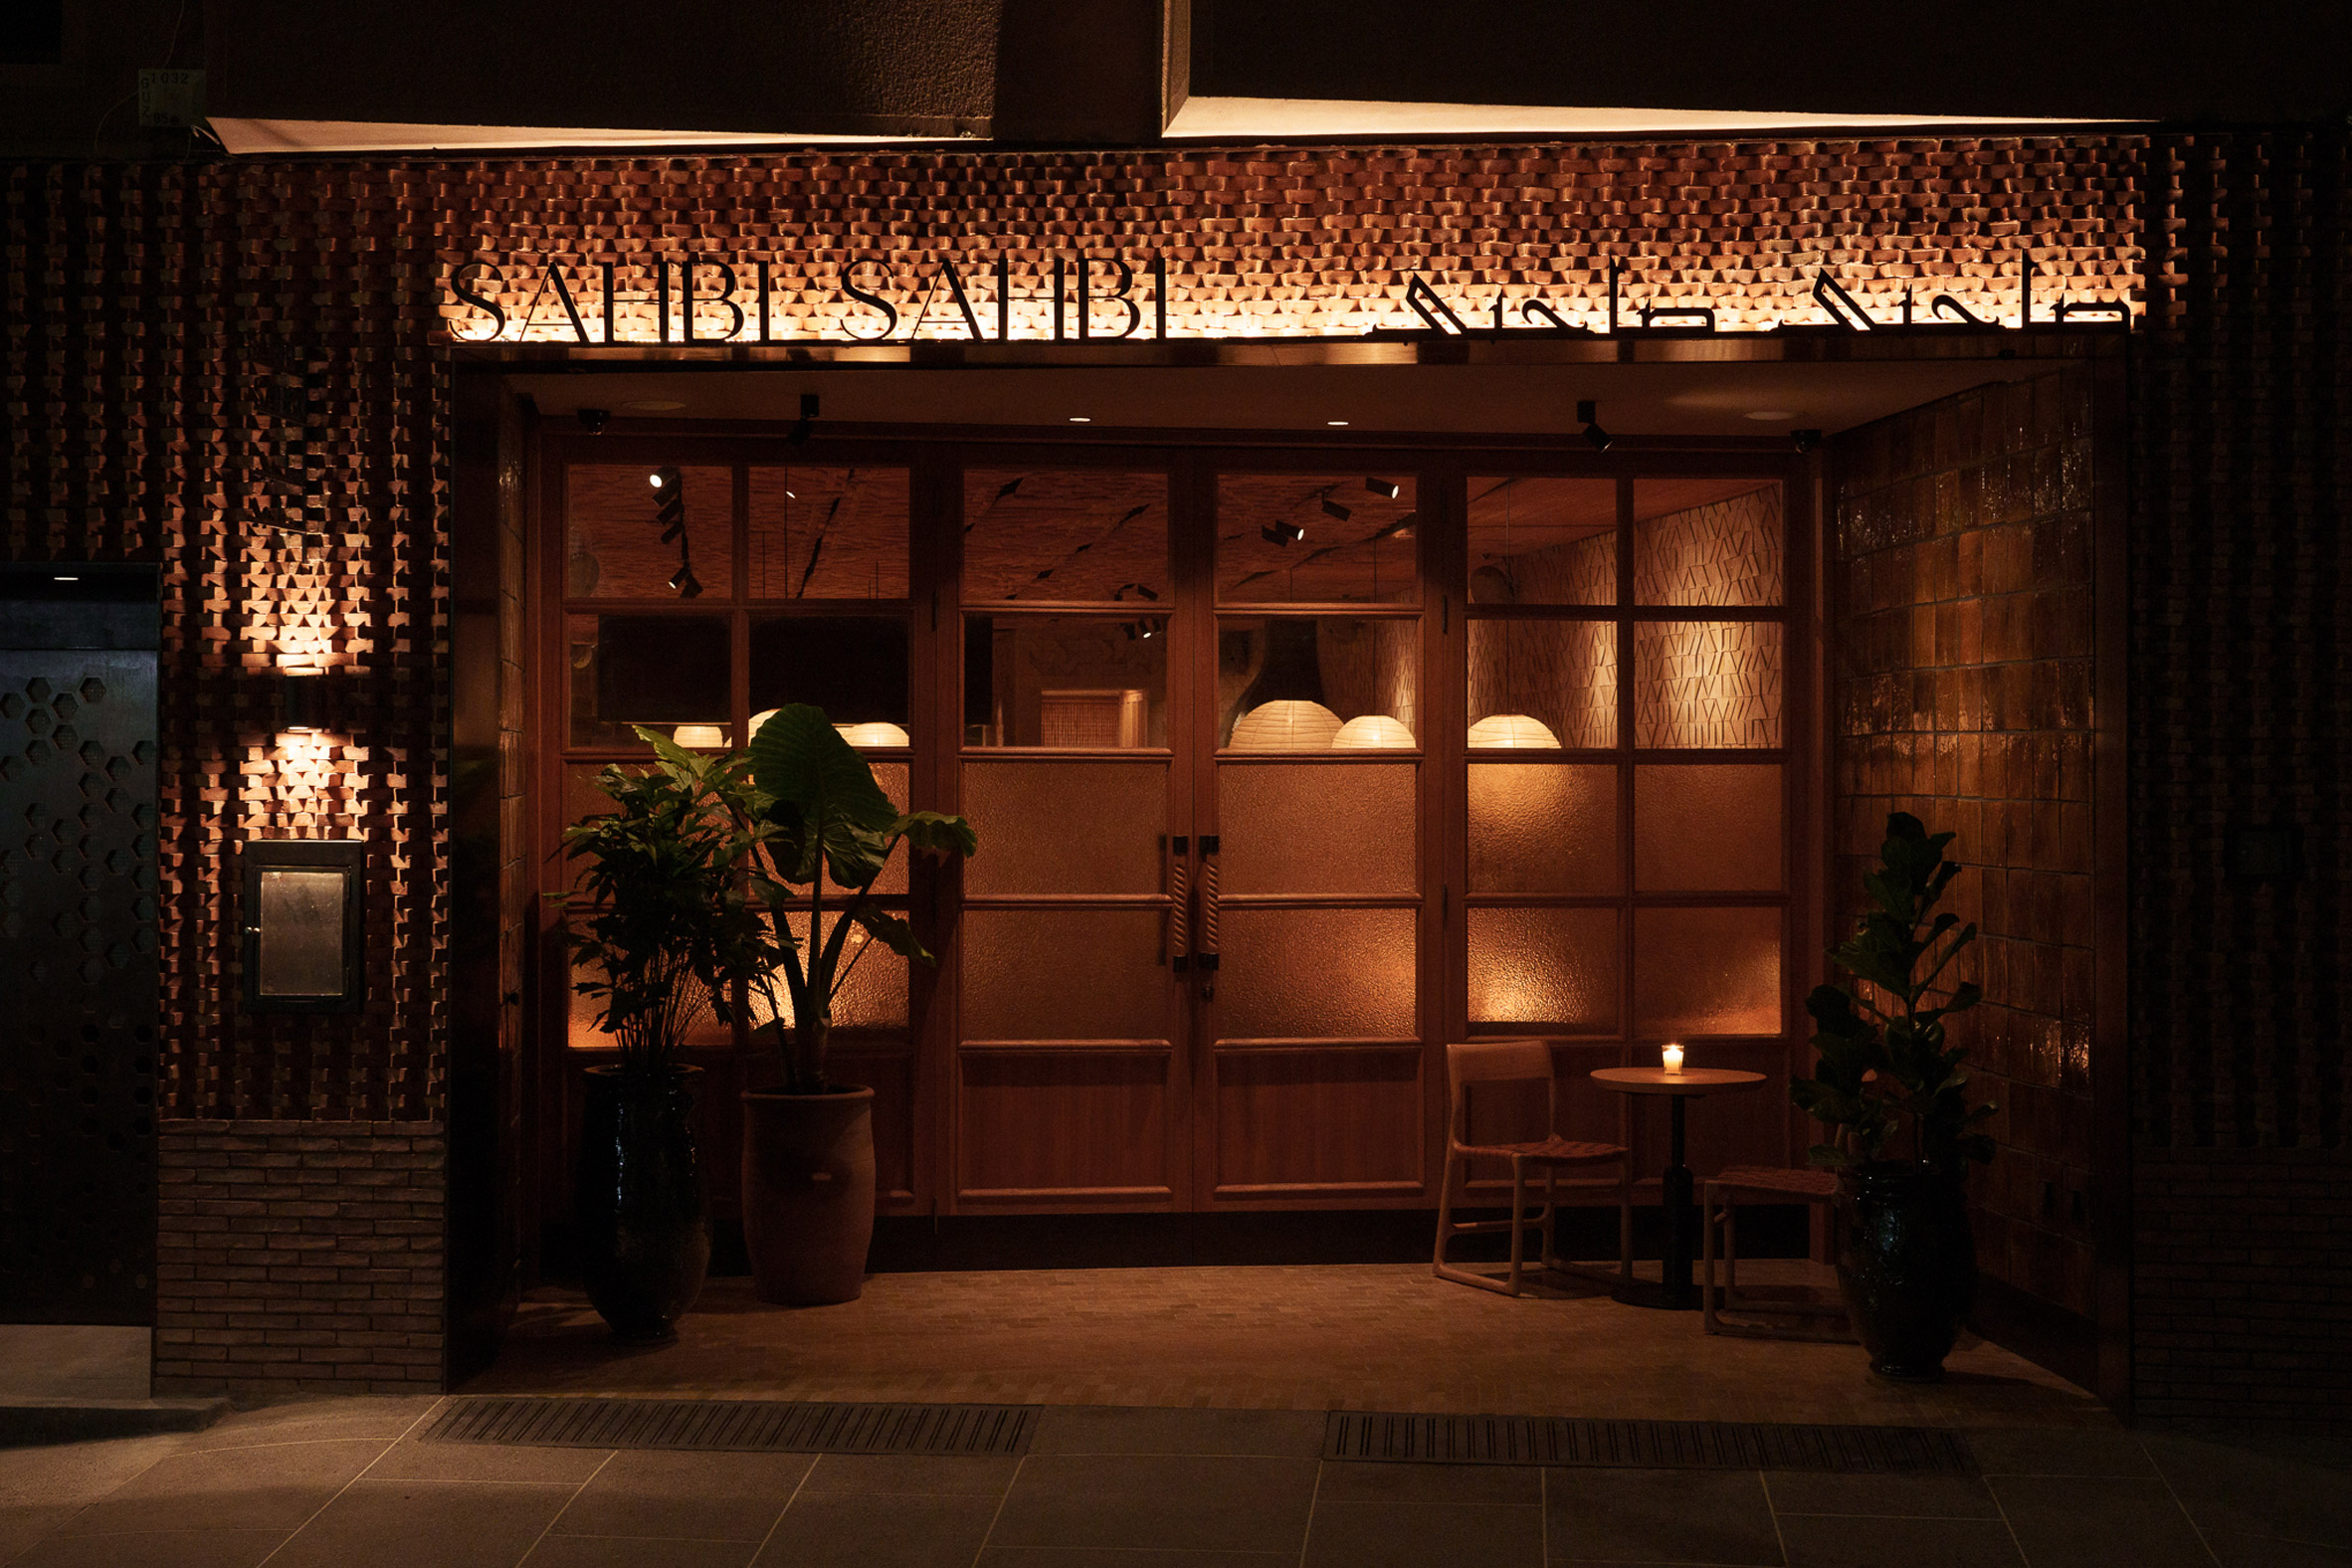 The exterior of Sahbi Sahbi restaurant